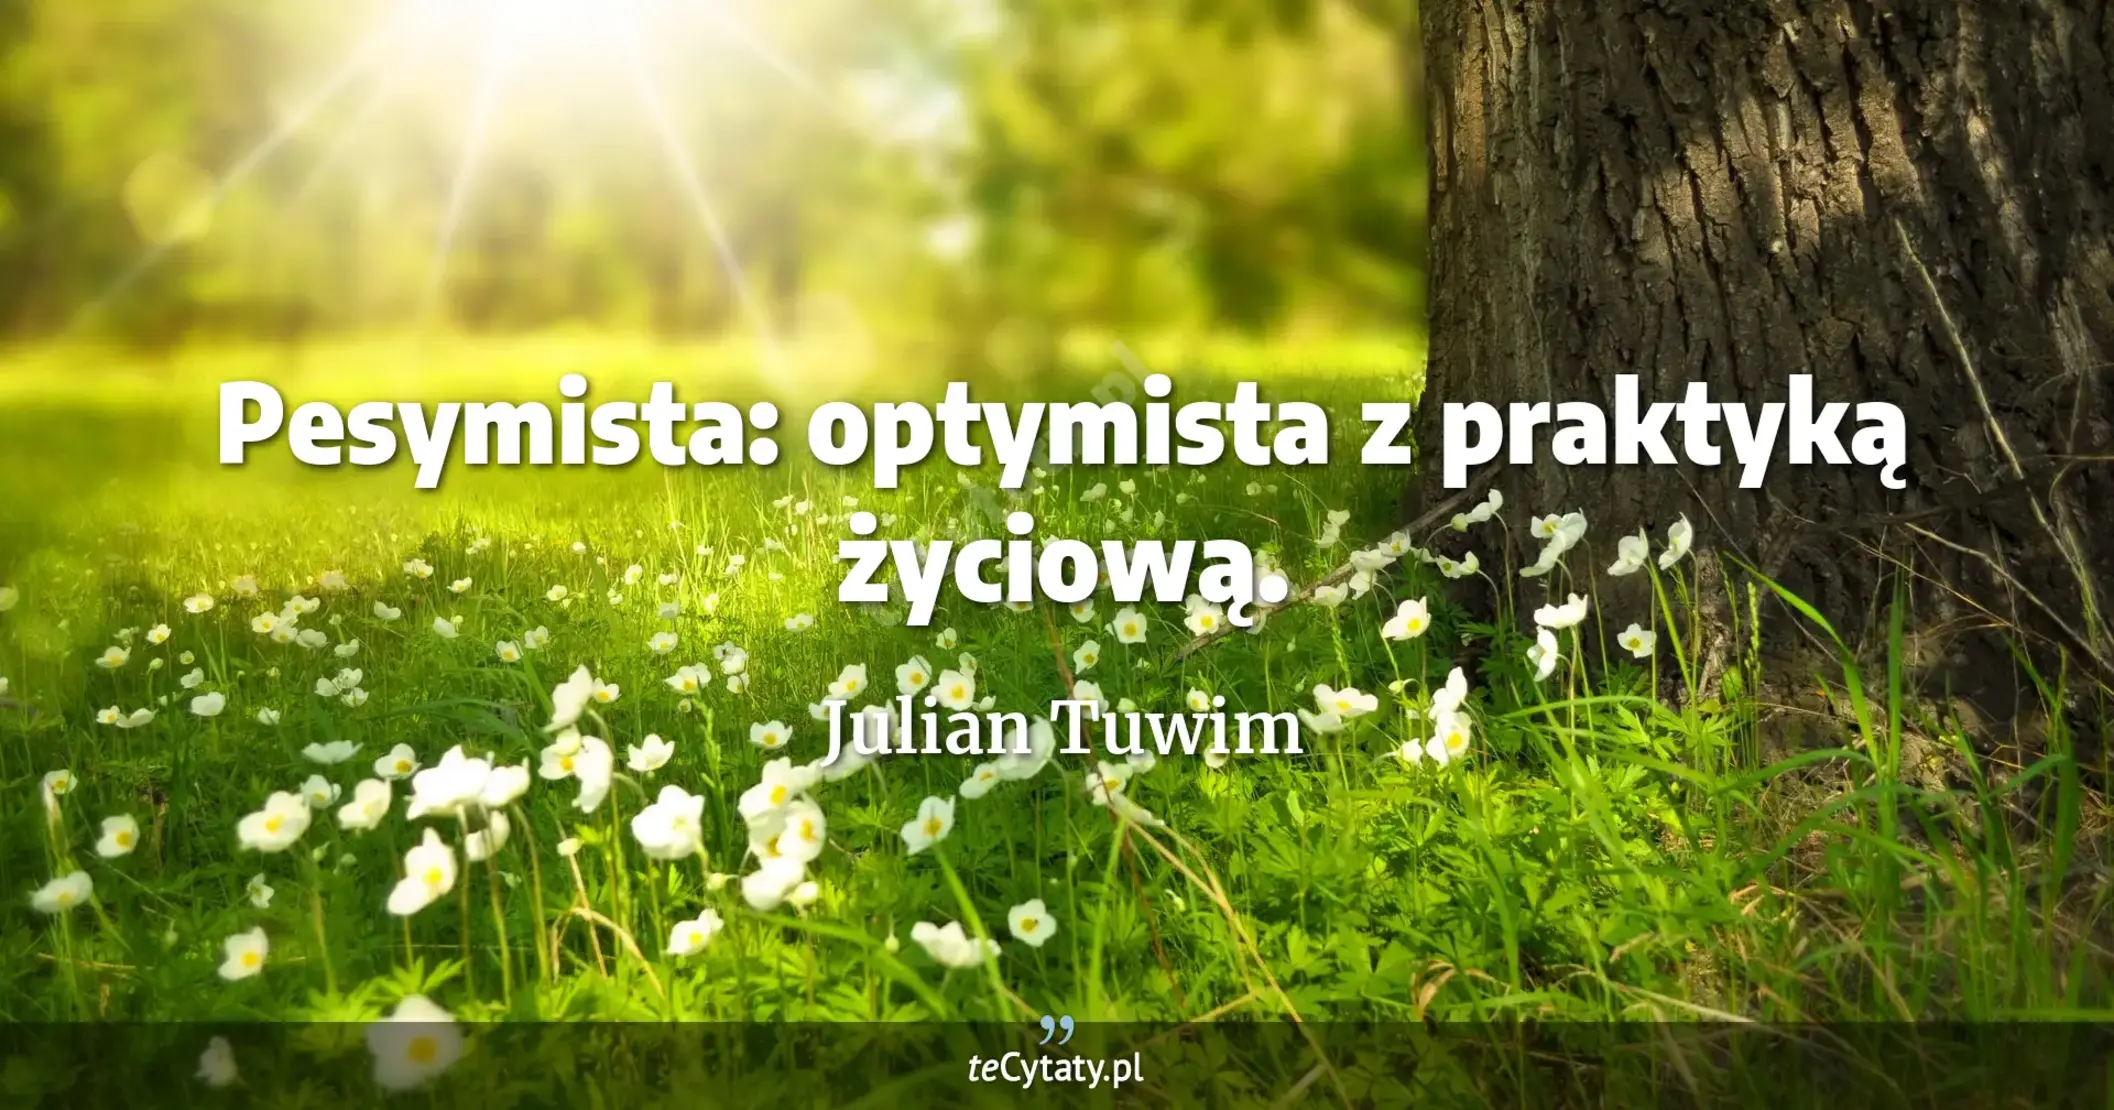 Pesymista: optymista z praktyką życiową. - Julian Tuwim